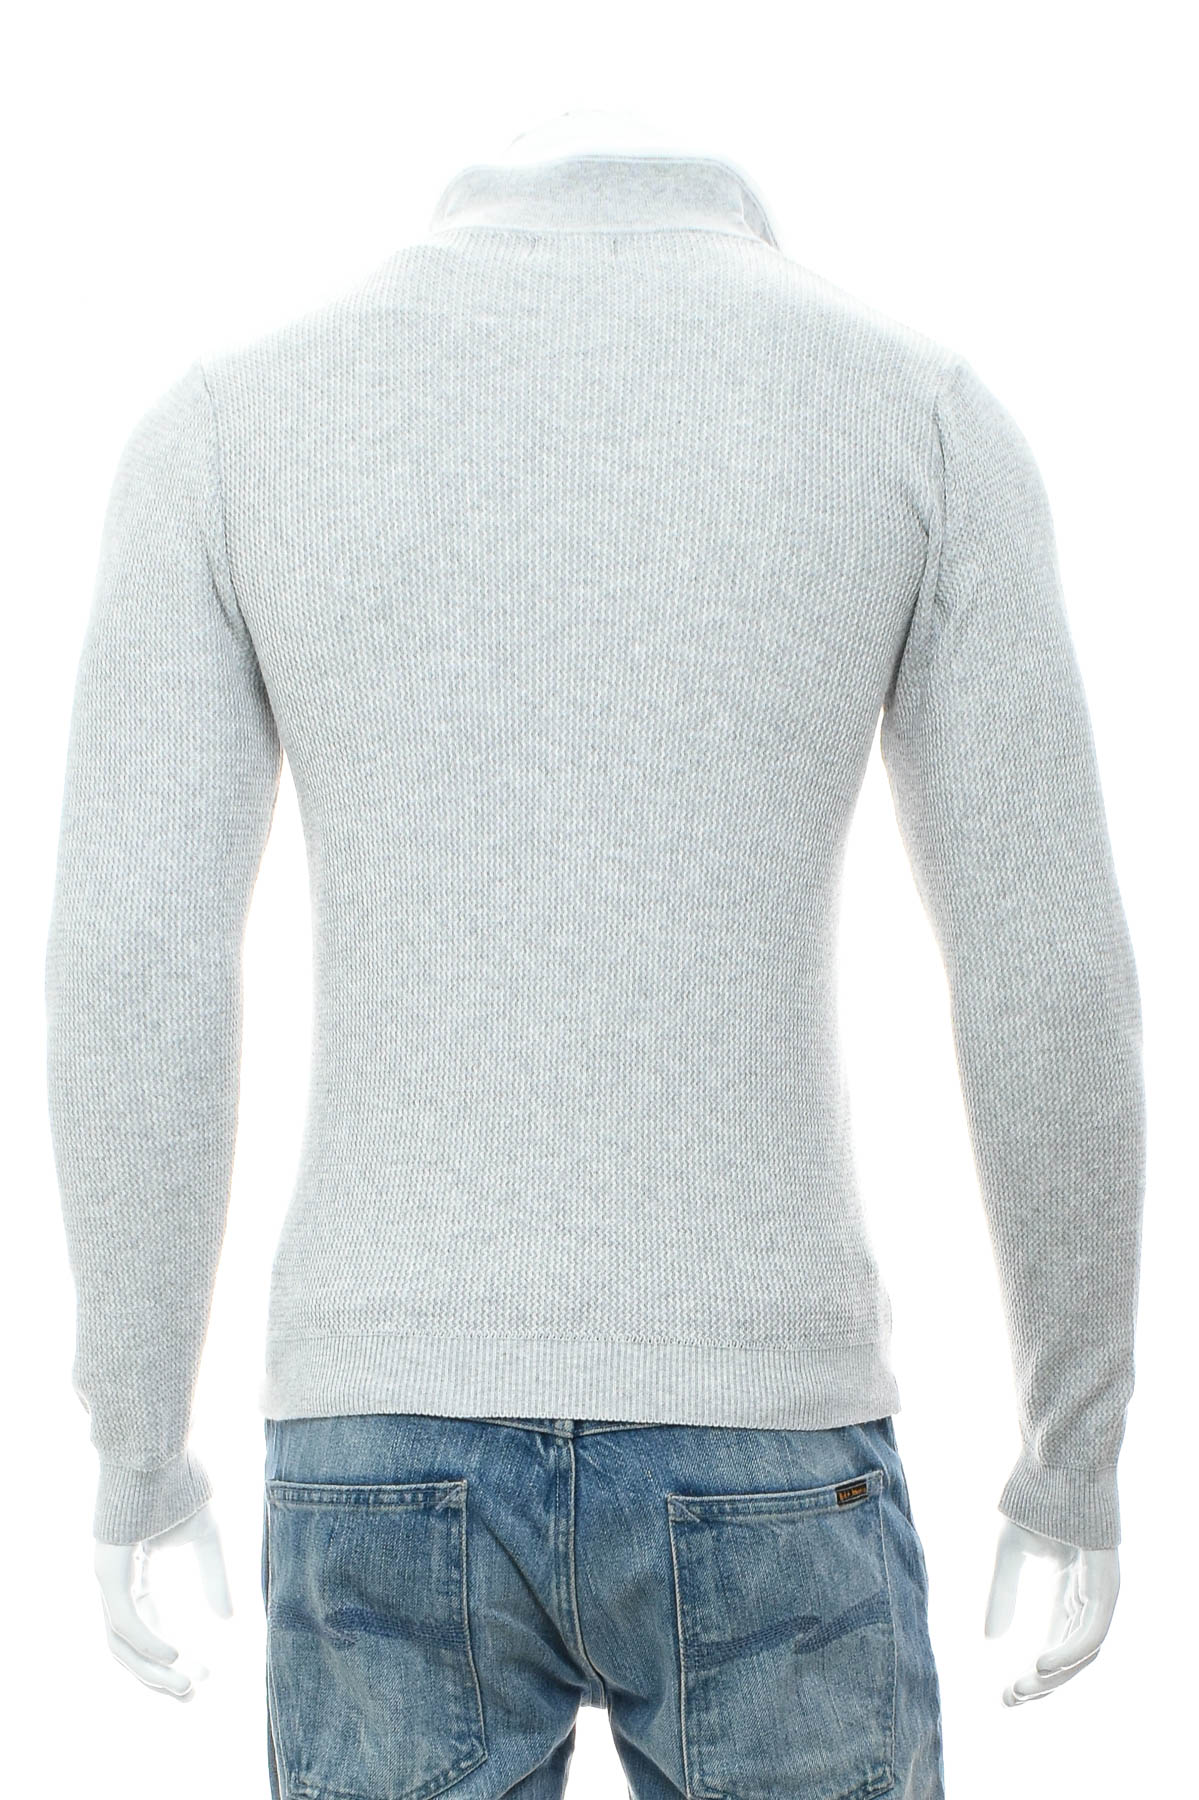 Men's sweater - Next - 1